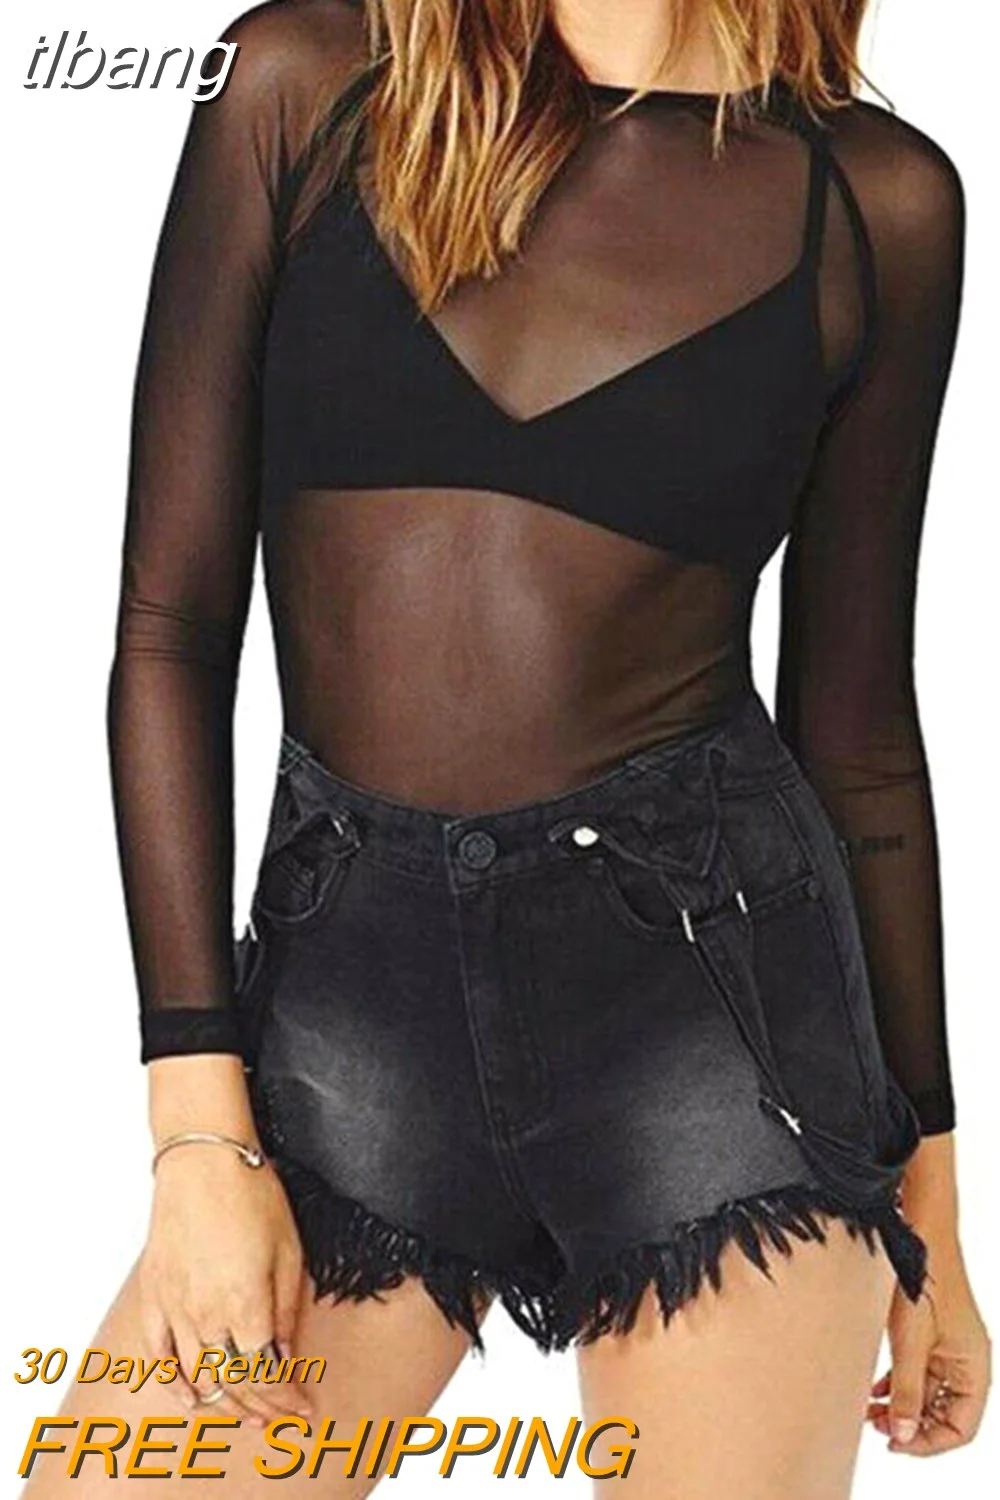 tlbang Women Blouse Shirt Sexy See Through Transparent Mesh Long Sleeve Bodycon Tops Casual Blouse Shirt Black Tee Shirts Woman Clothes